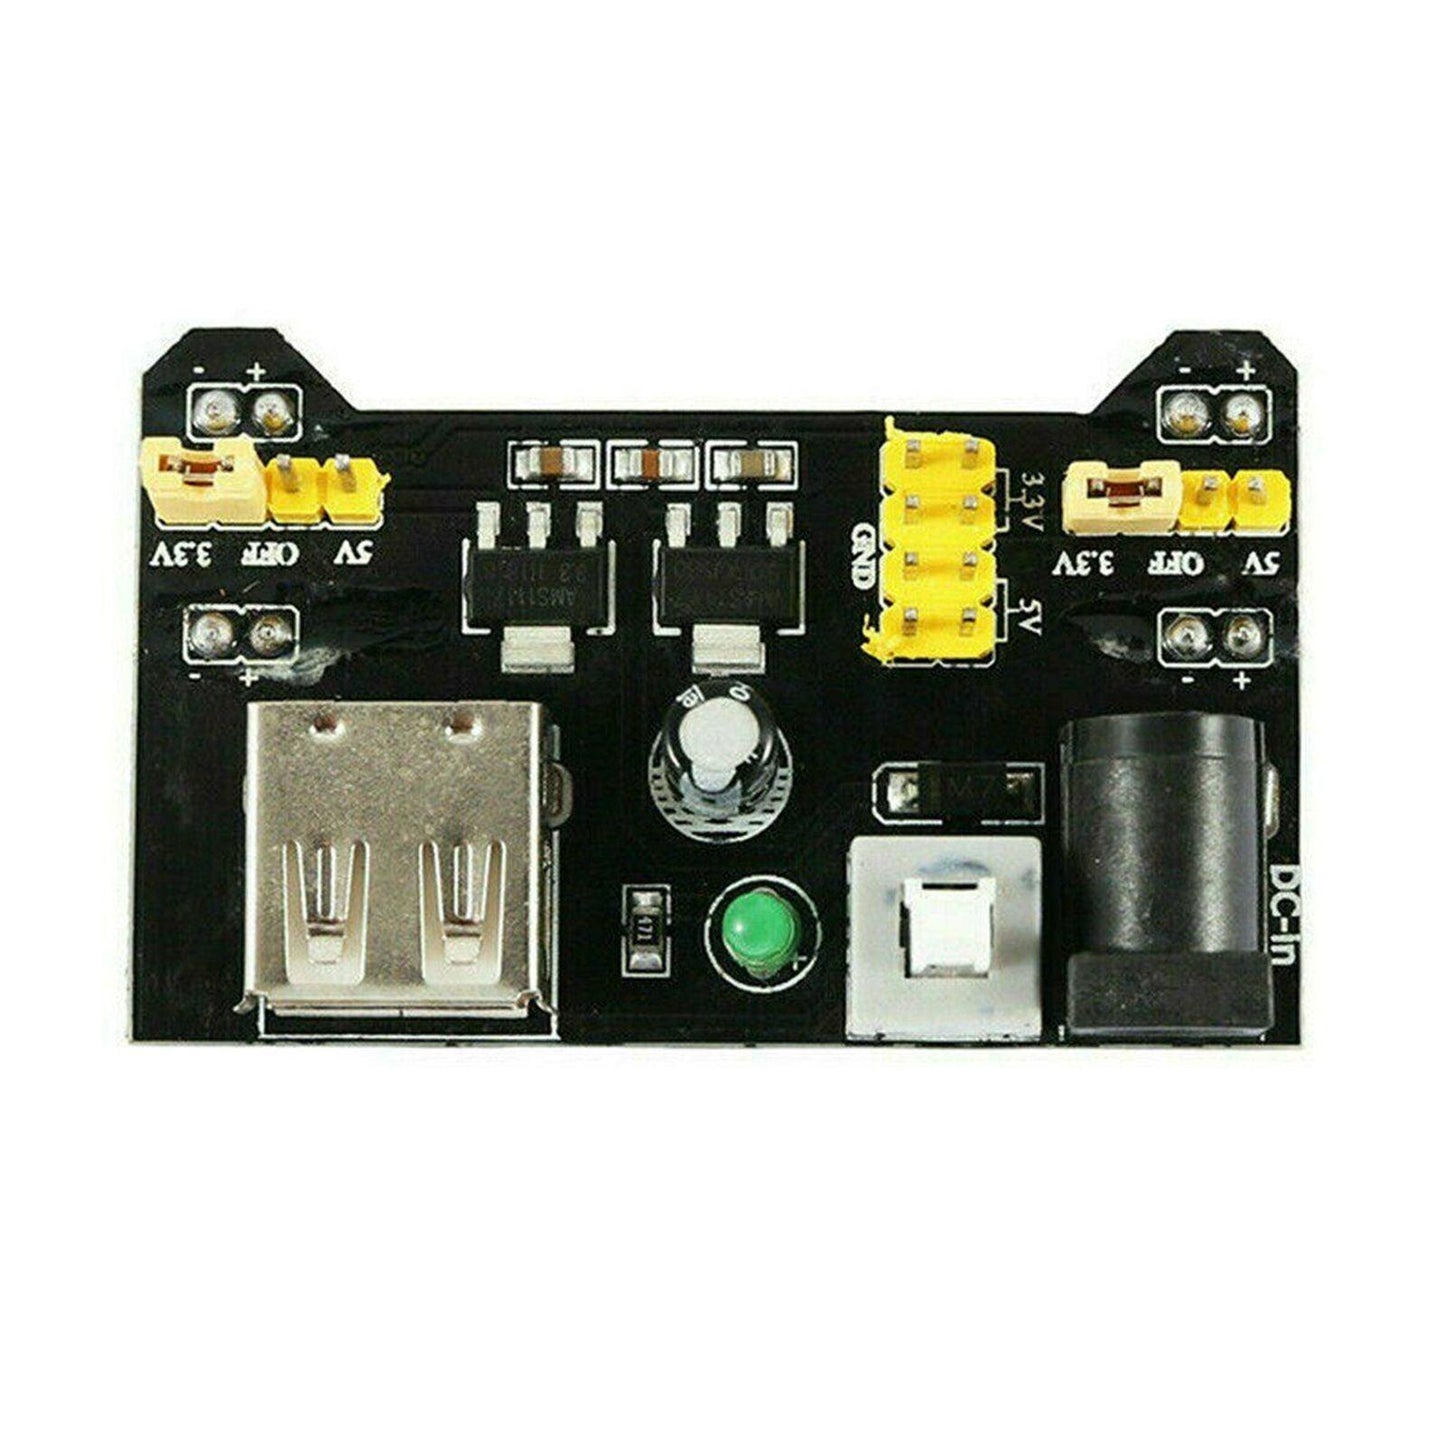 Electronics Component Basic Starter Kit w/830 Tie-Points Breadboard Resistor-Shalav5